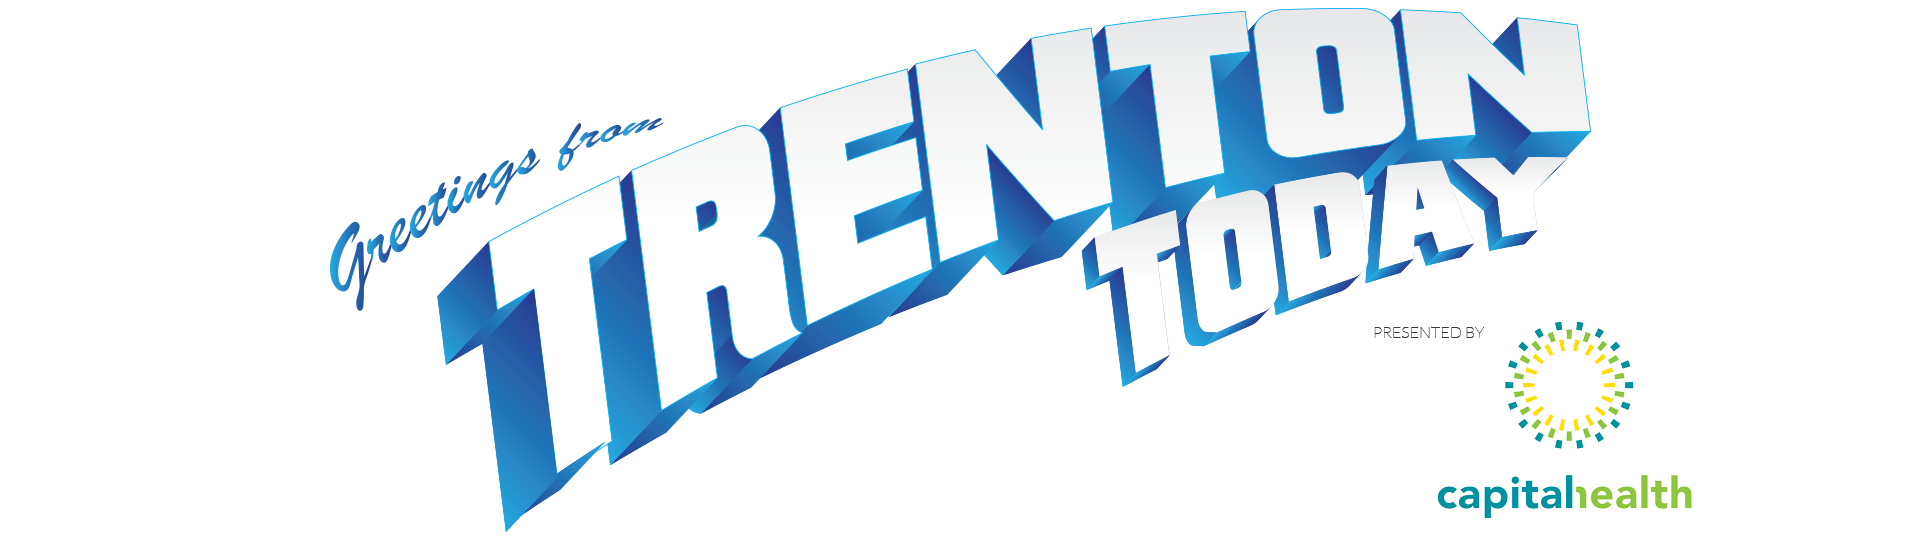 Trenton Today show logo